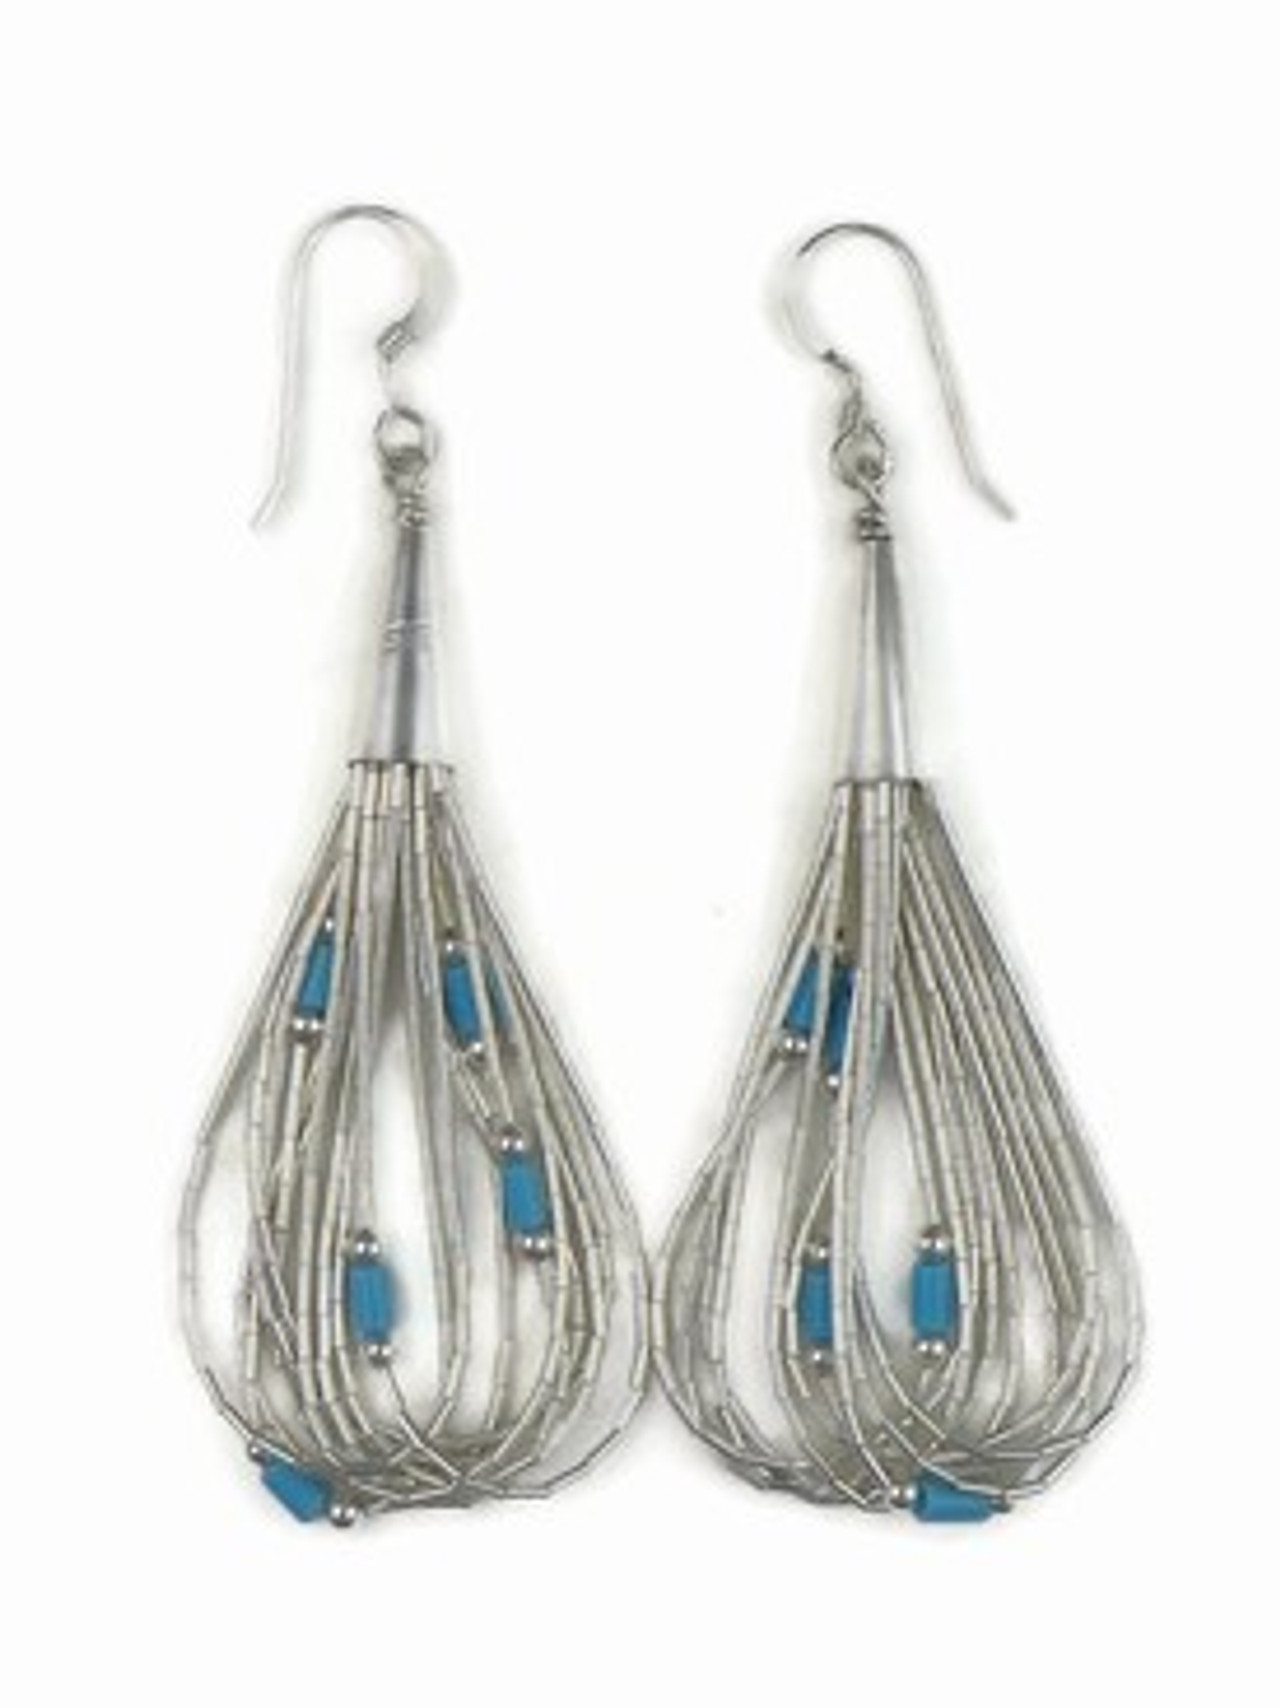 Turquoise Earrings | Native American Turquoise Earrings